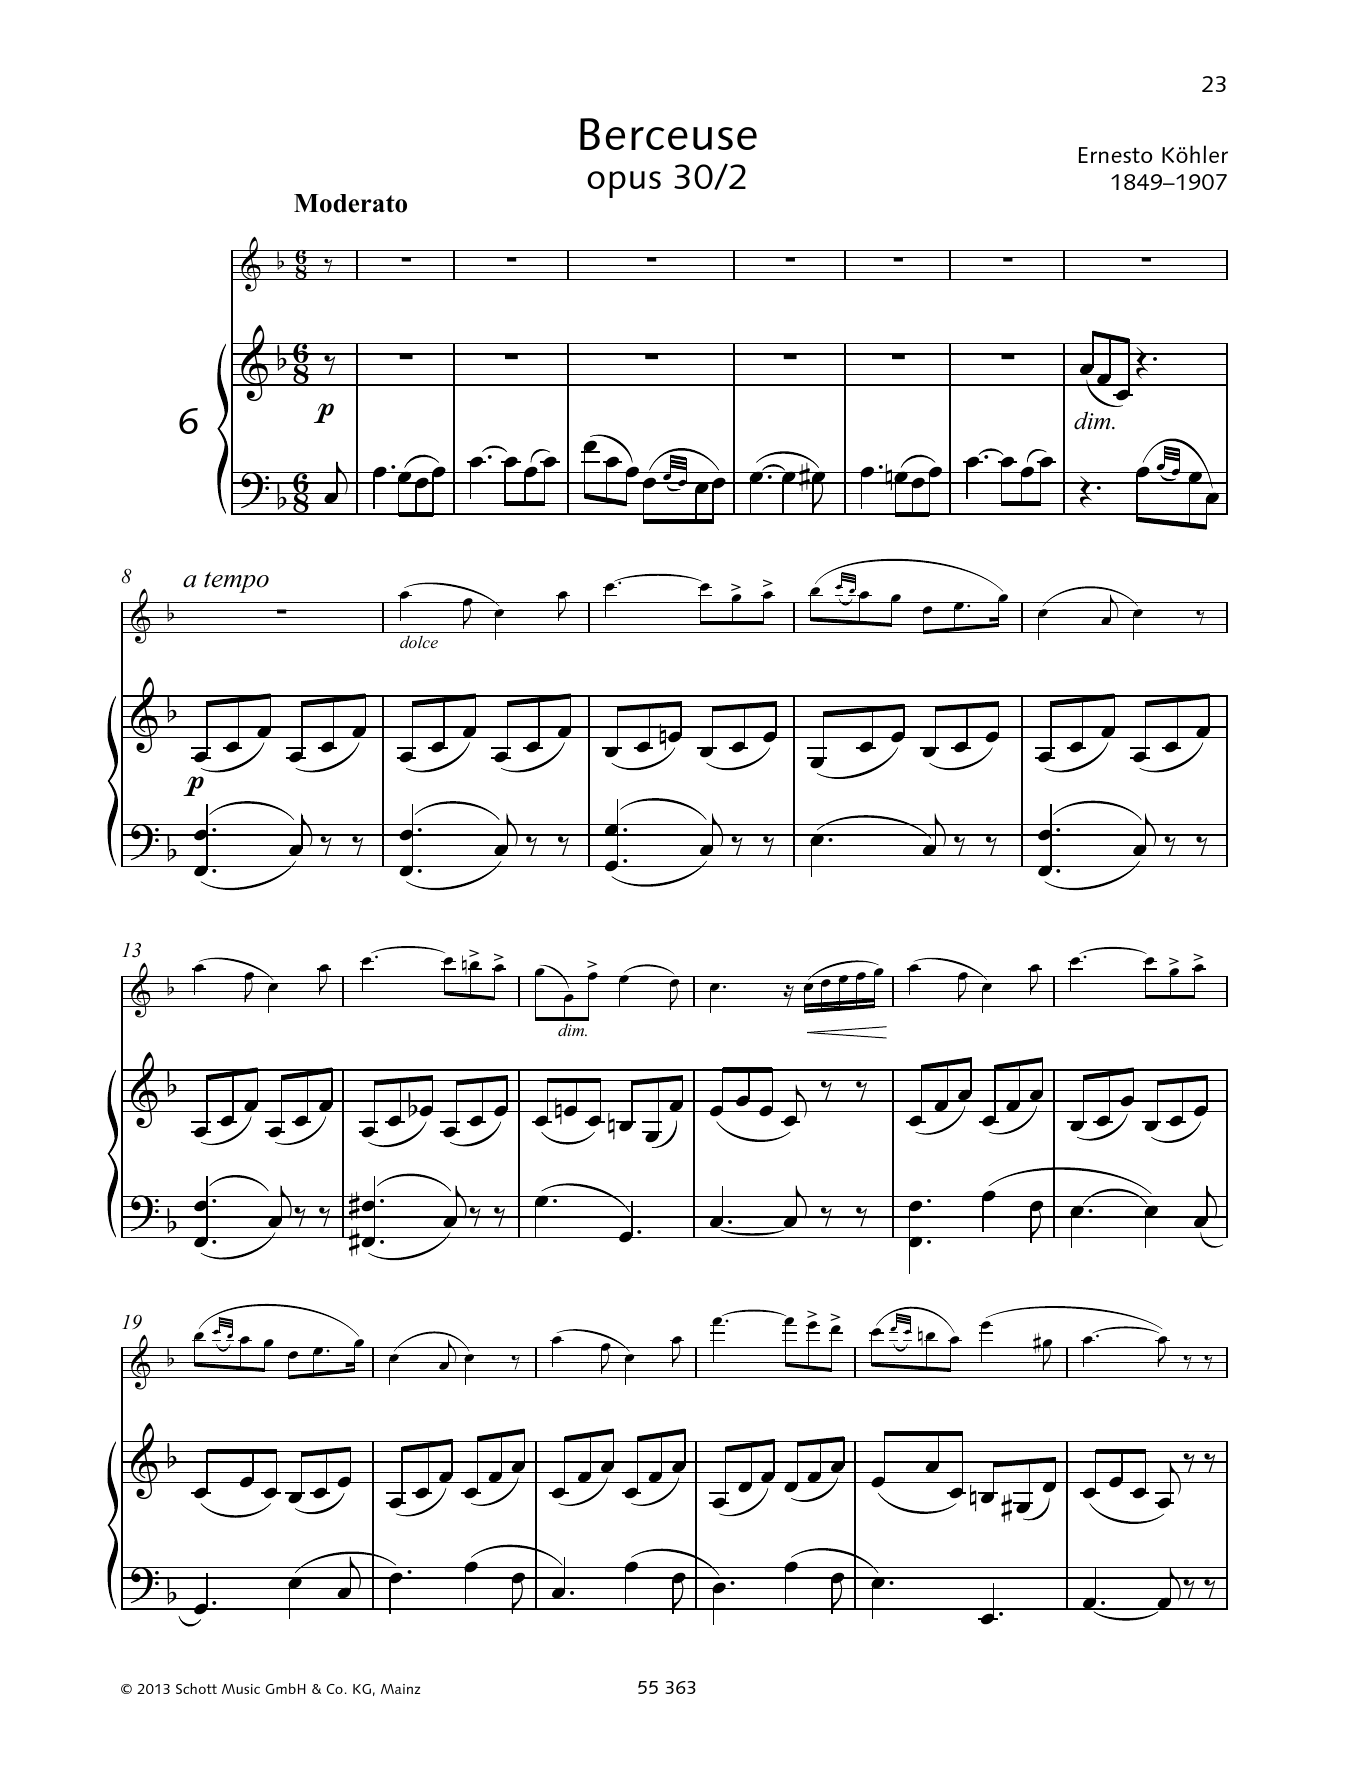 Ernesto Kohler Berceuse Sheet Music Notes & Chords for Woodwind Solo - Download or Print PDF